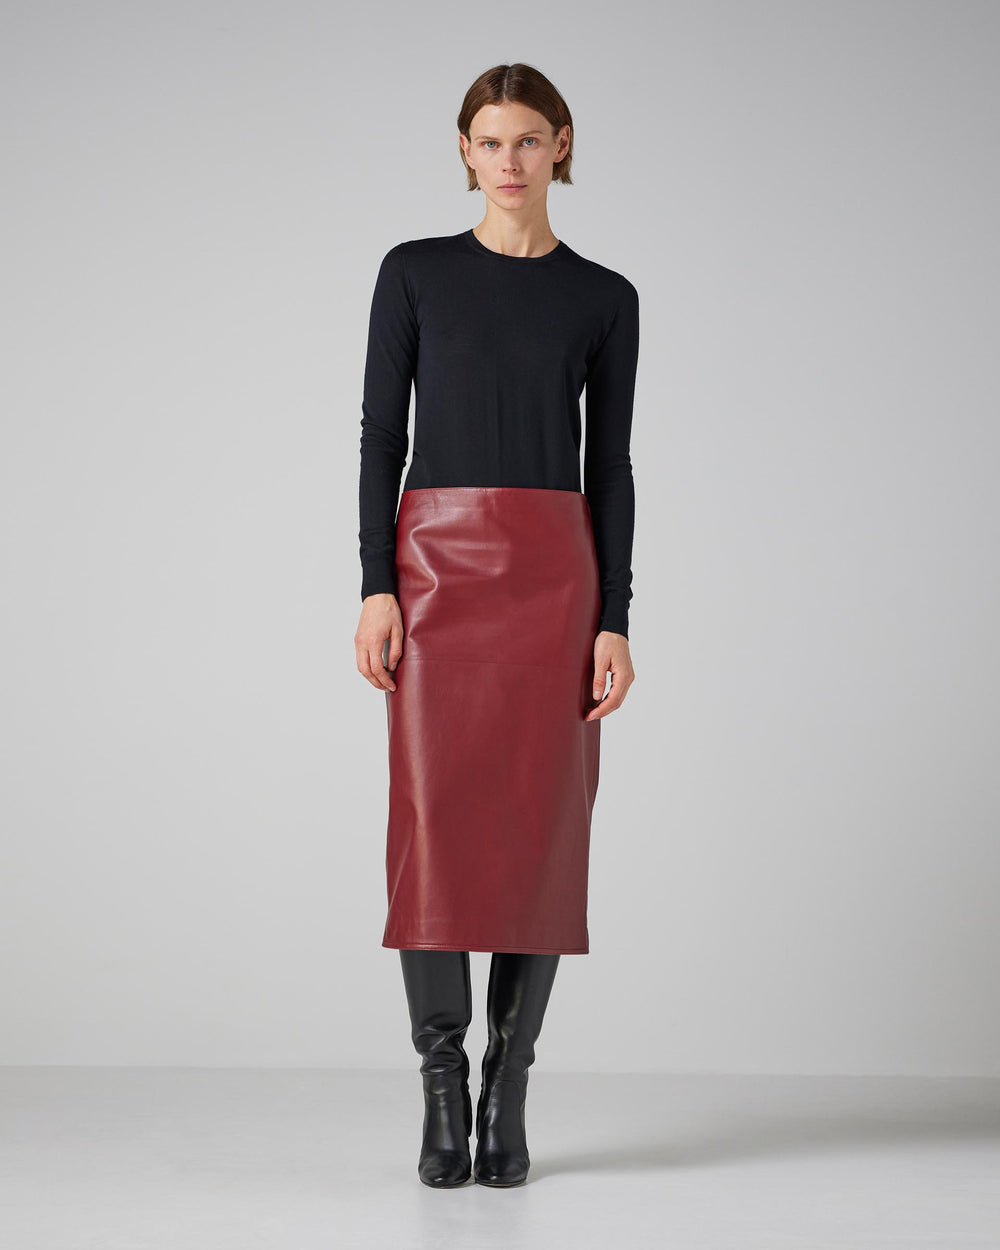 Nova Skirt in Nappa Leather, Burgundy